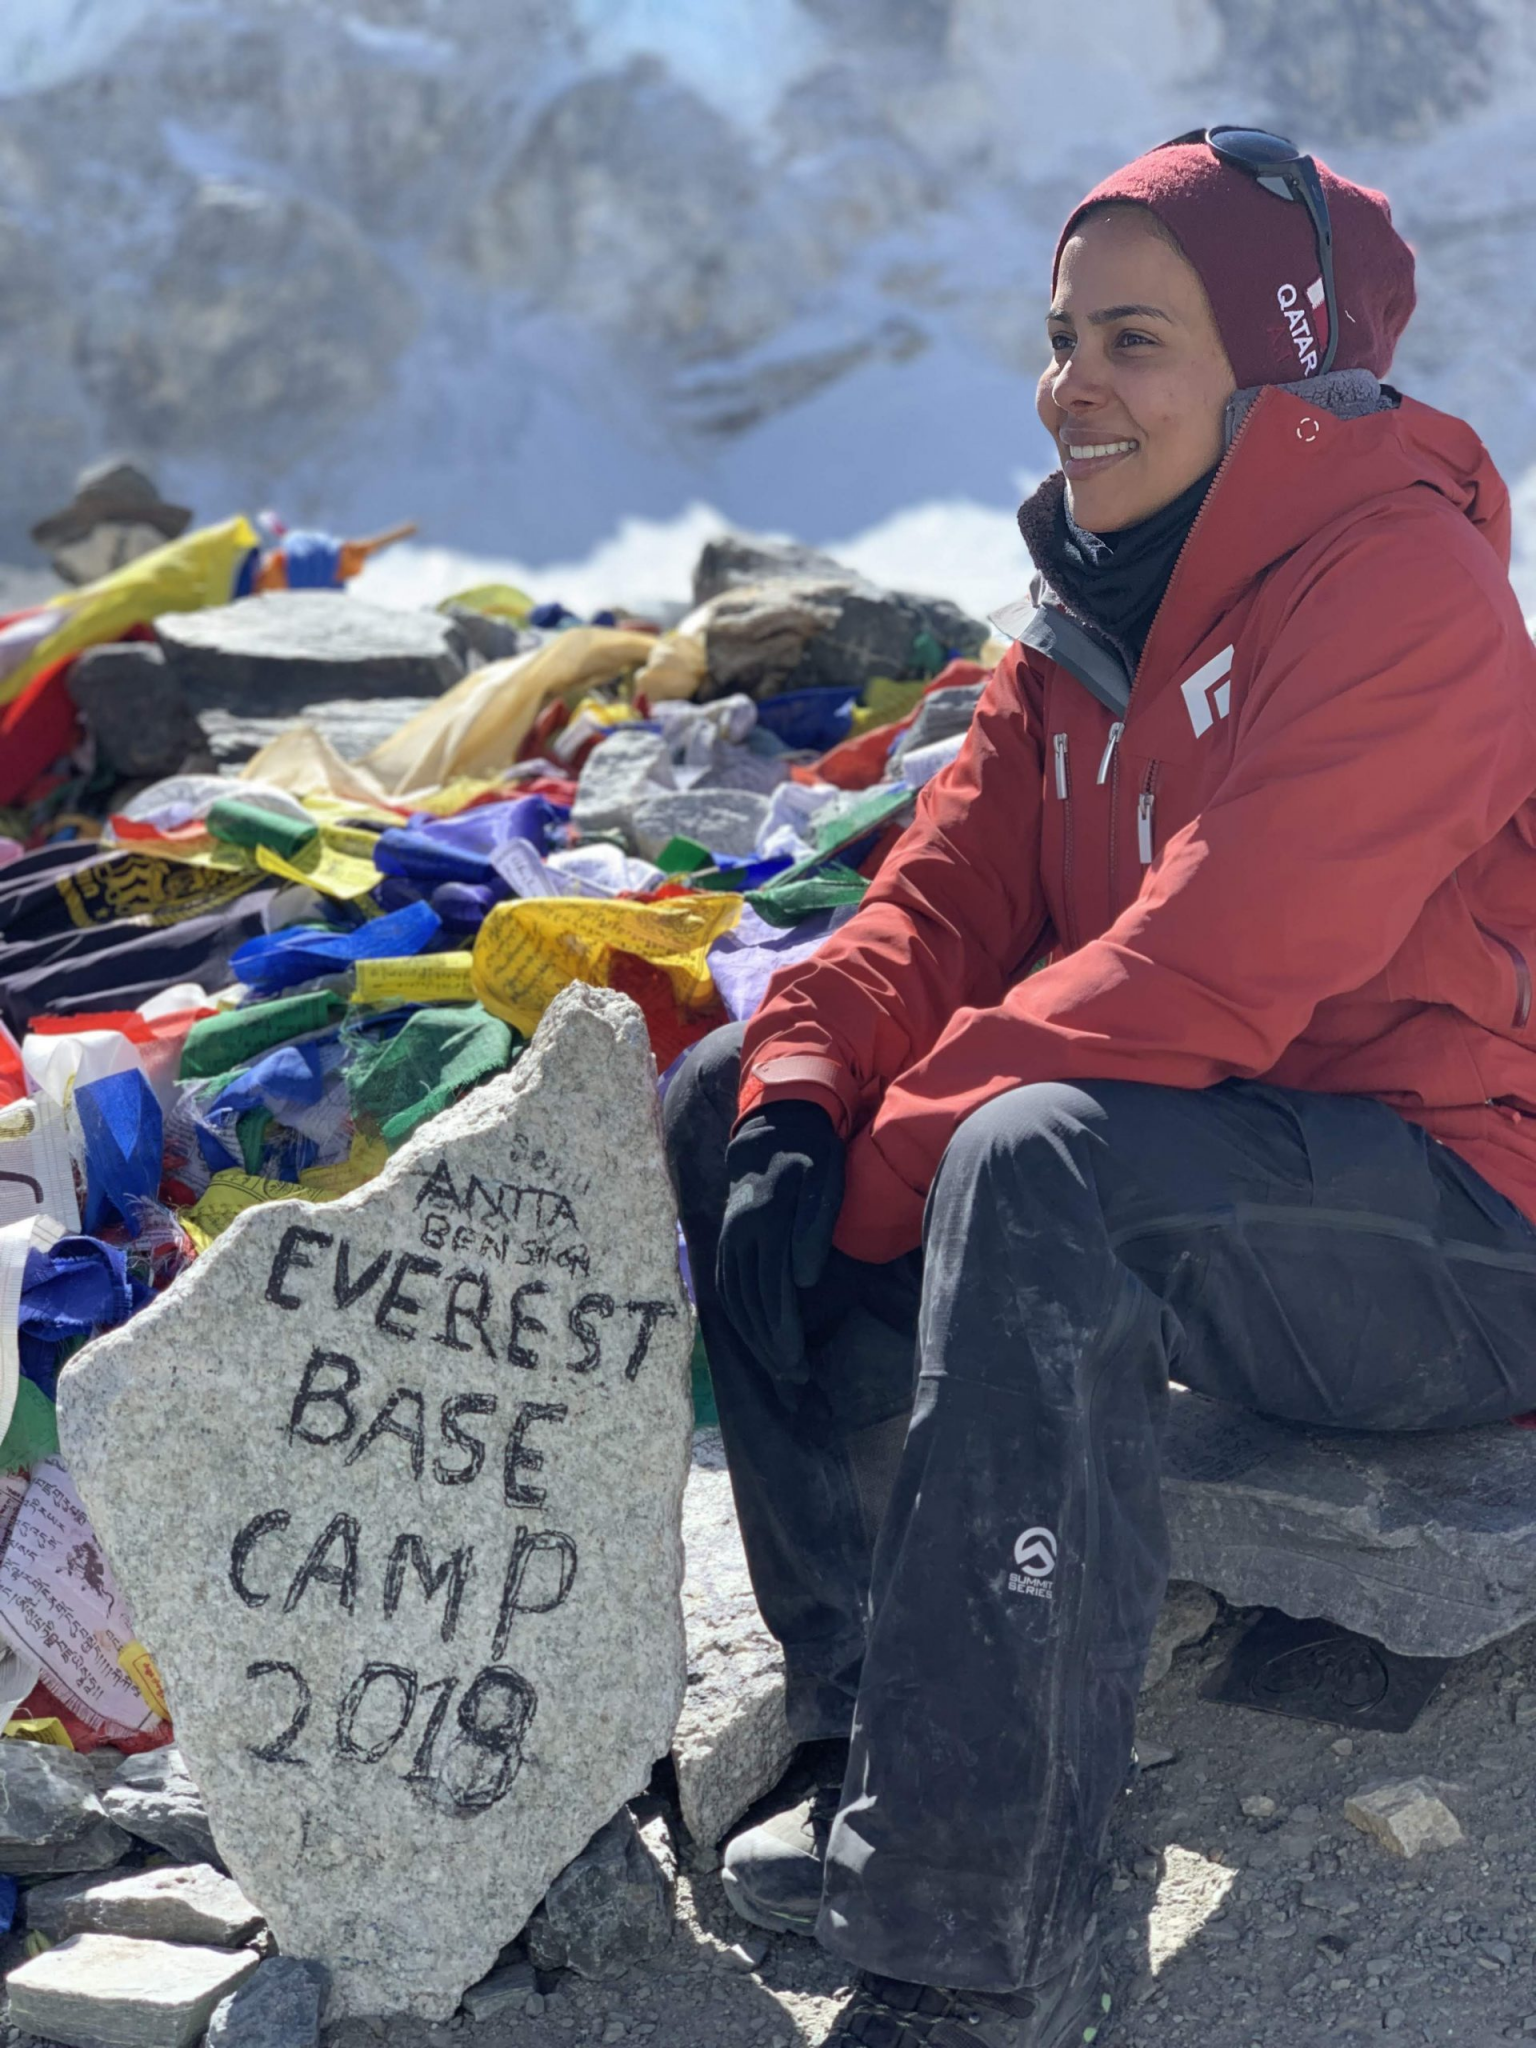 Sheikha Asma Al Thani will attempt to climb Mount Everest ©ANOC